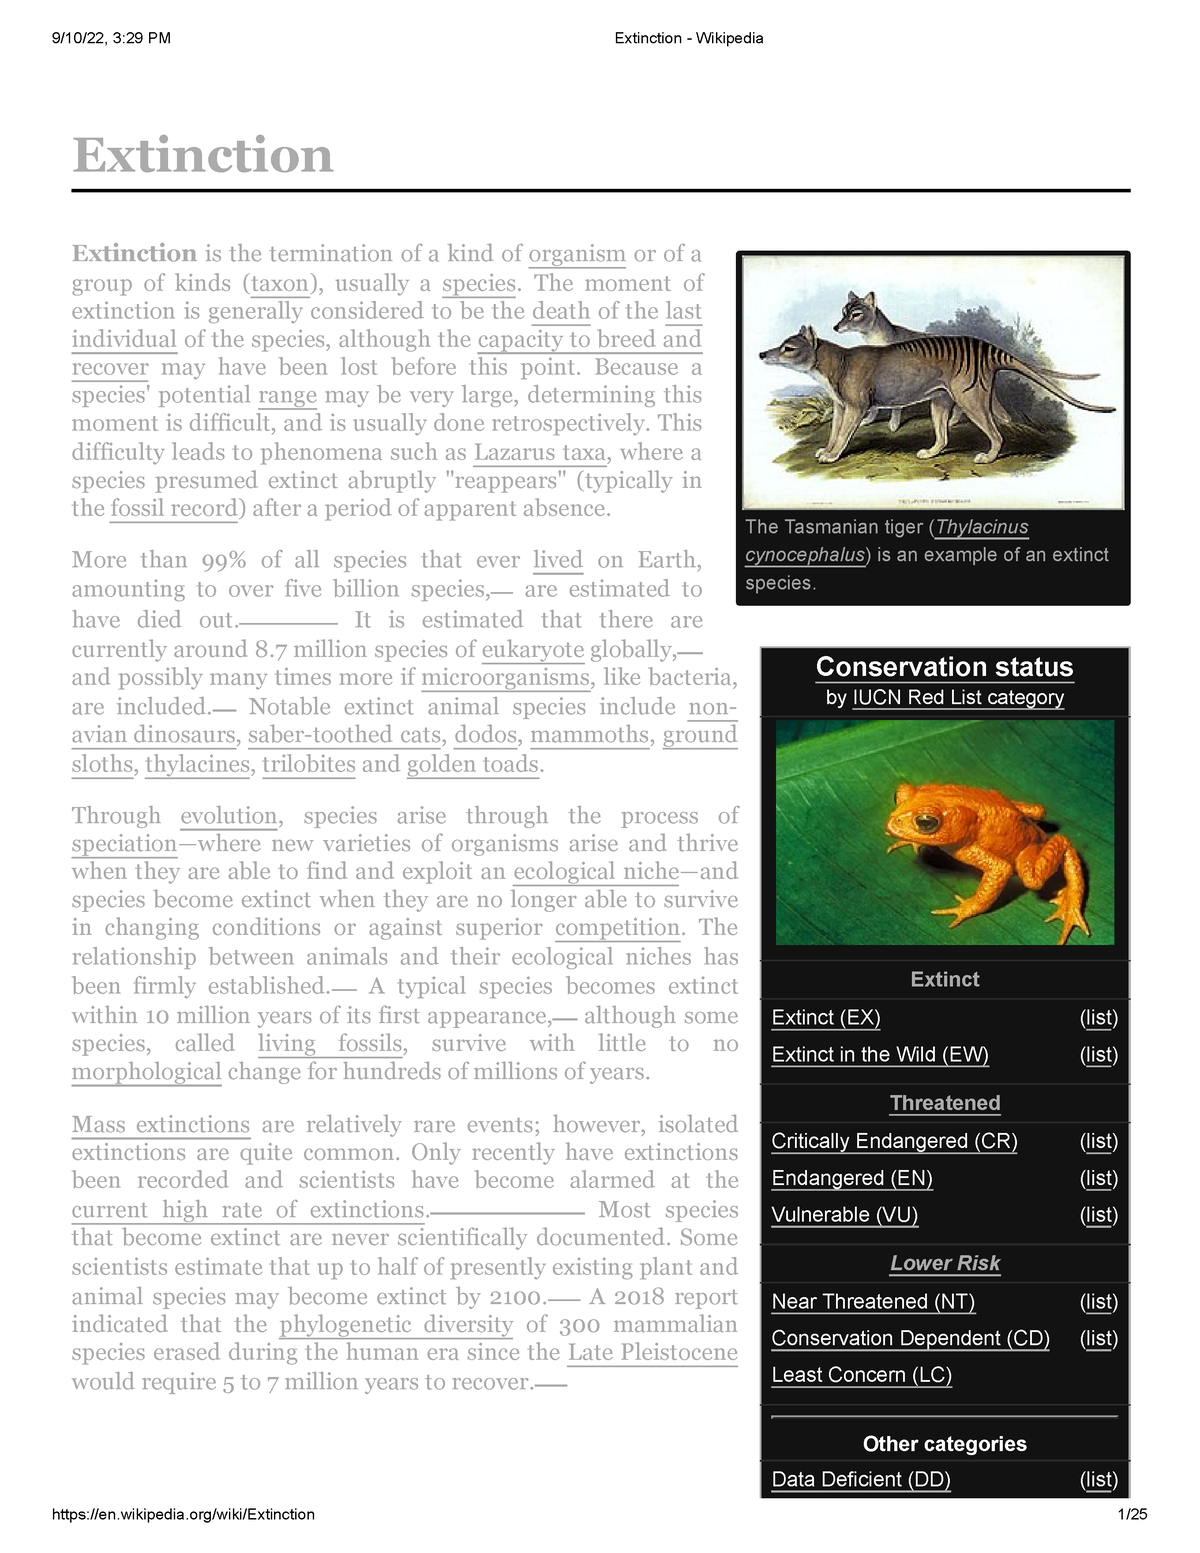 Aliens Versus Predator: Extinction - Wikipedia